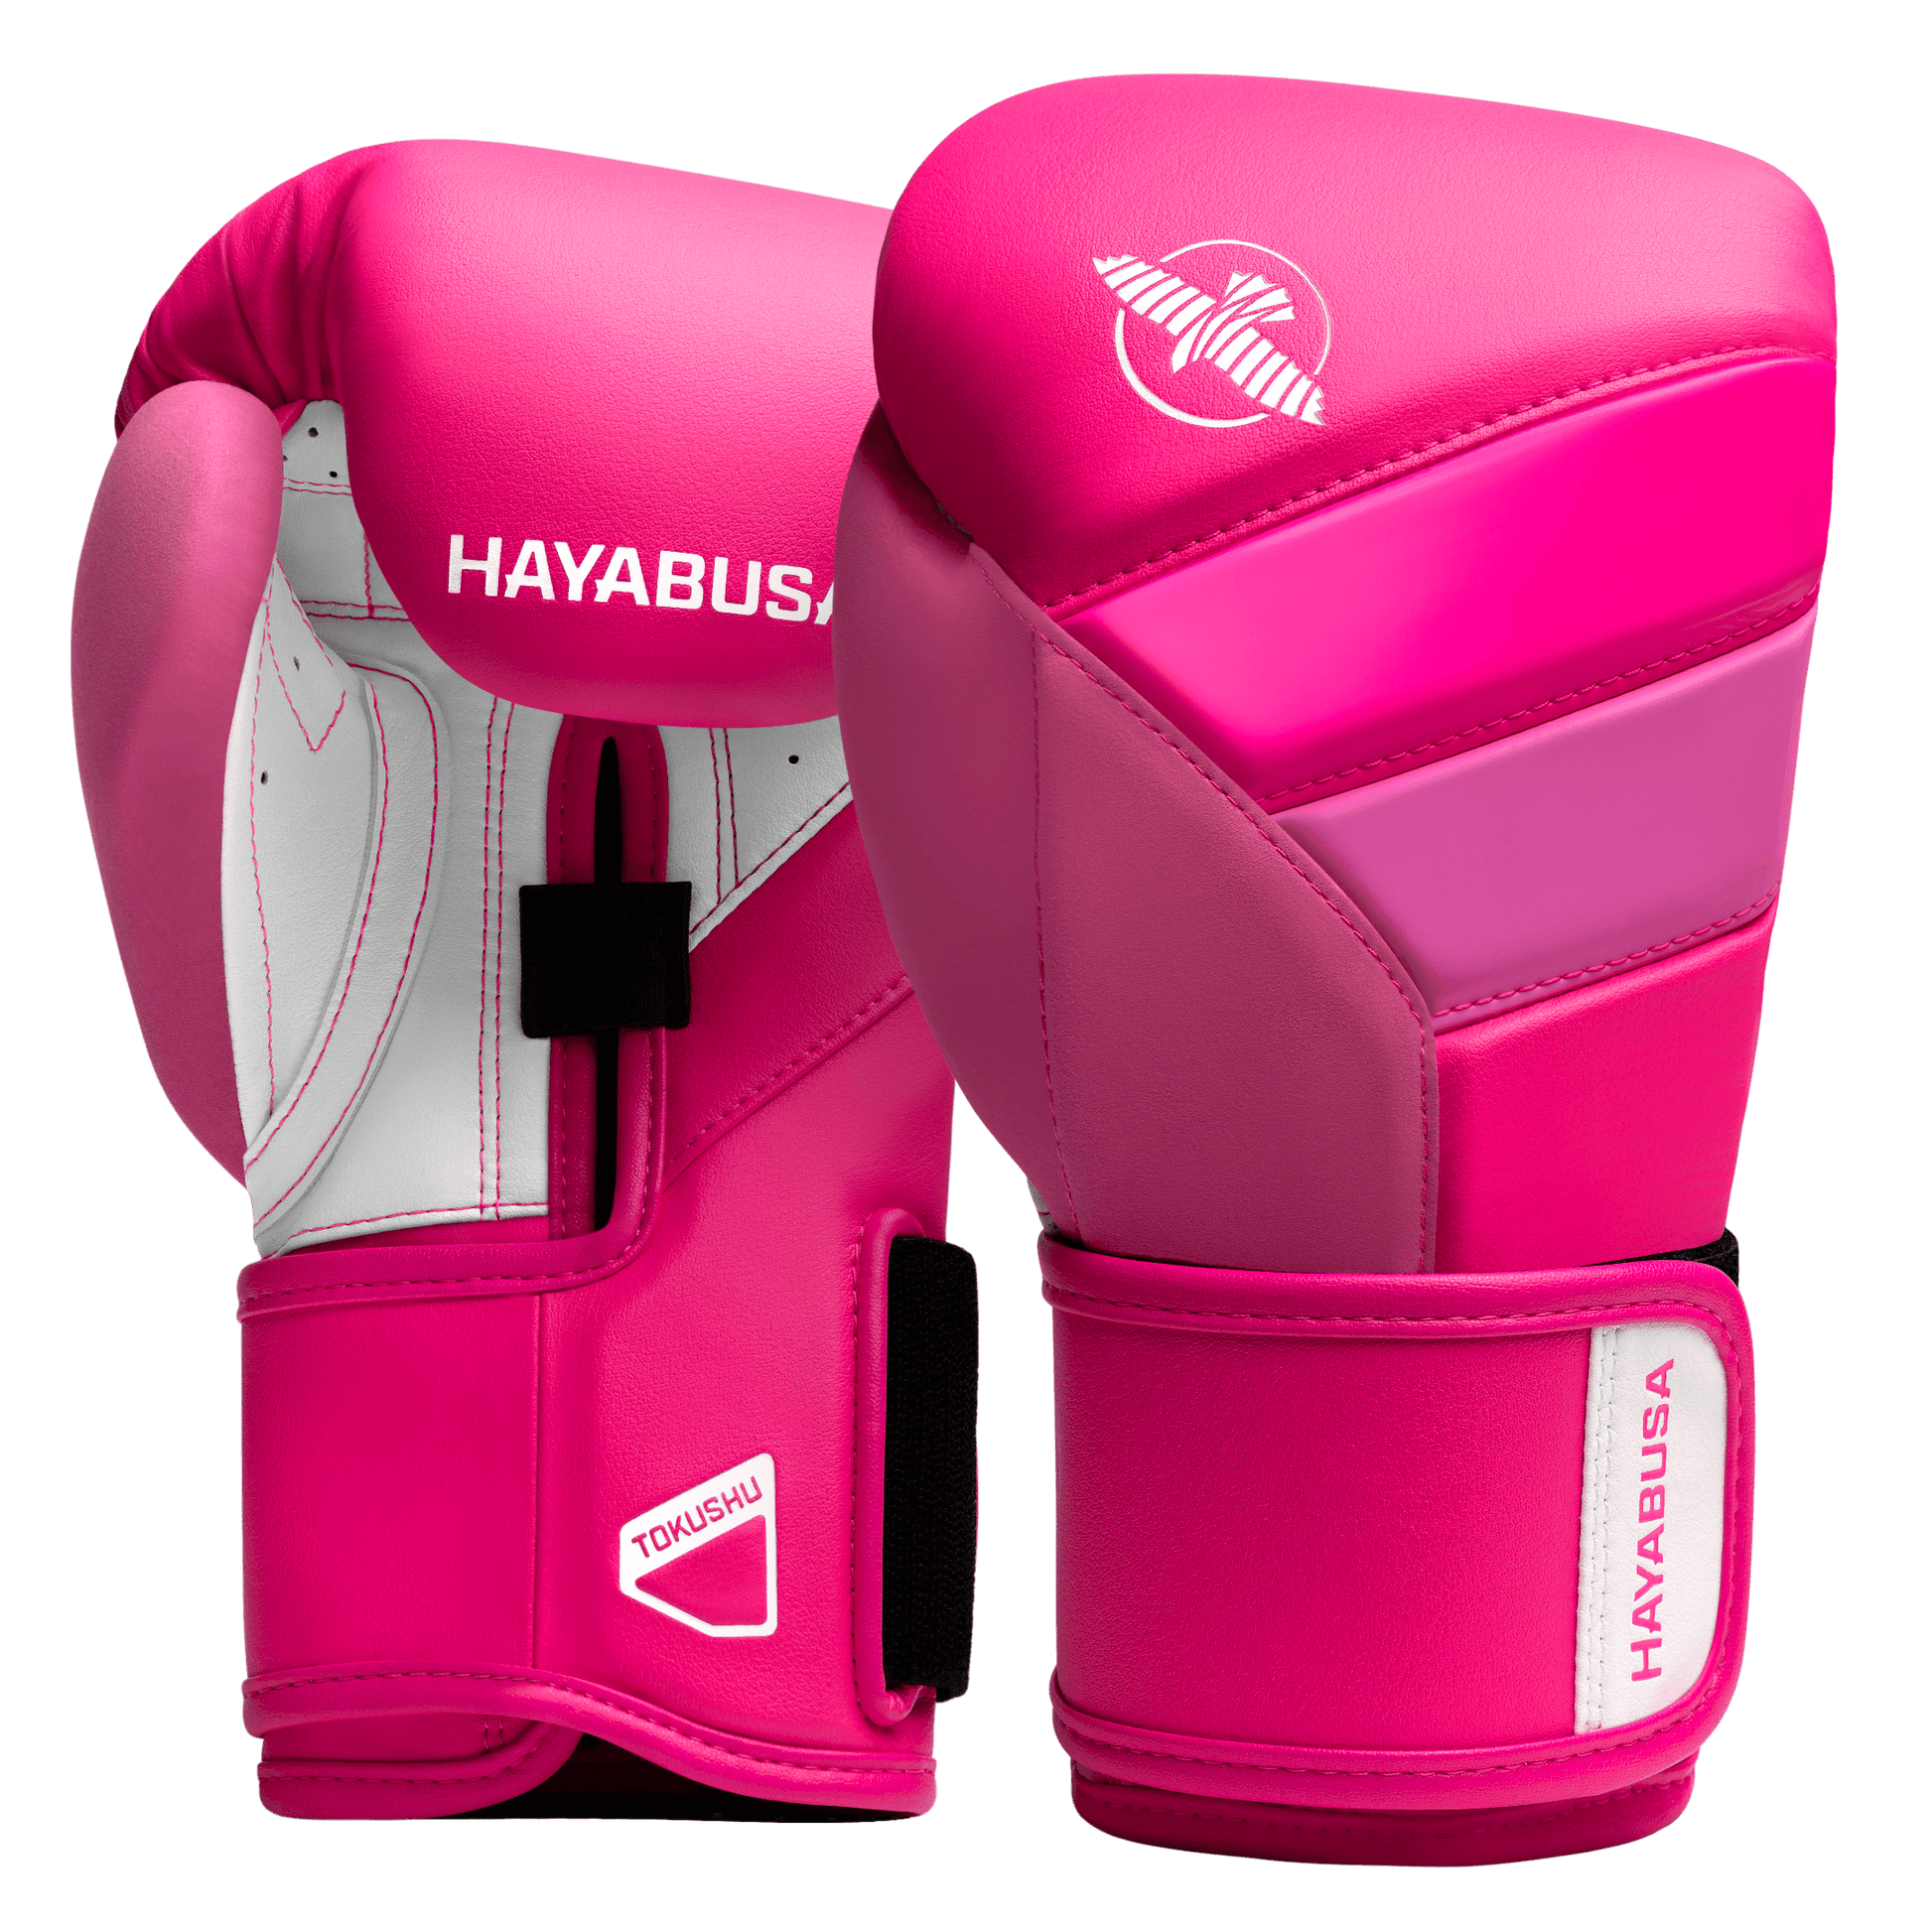 Hayabusa T3 Neon Boxing Gloves - Violent Art Shop